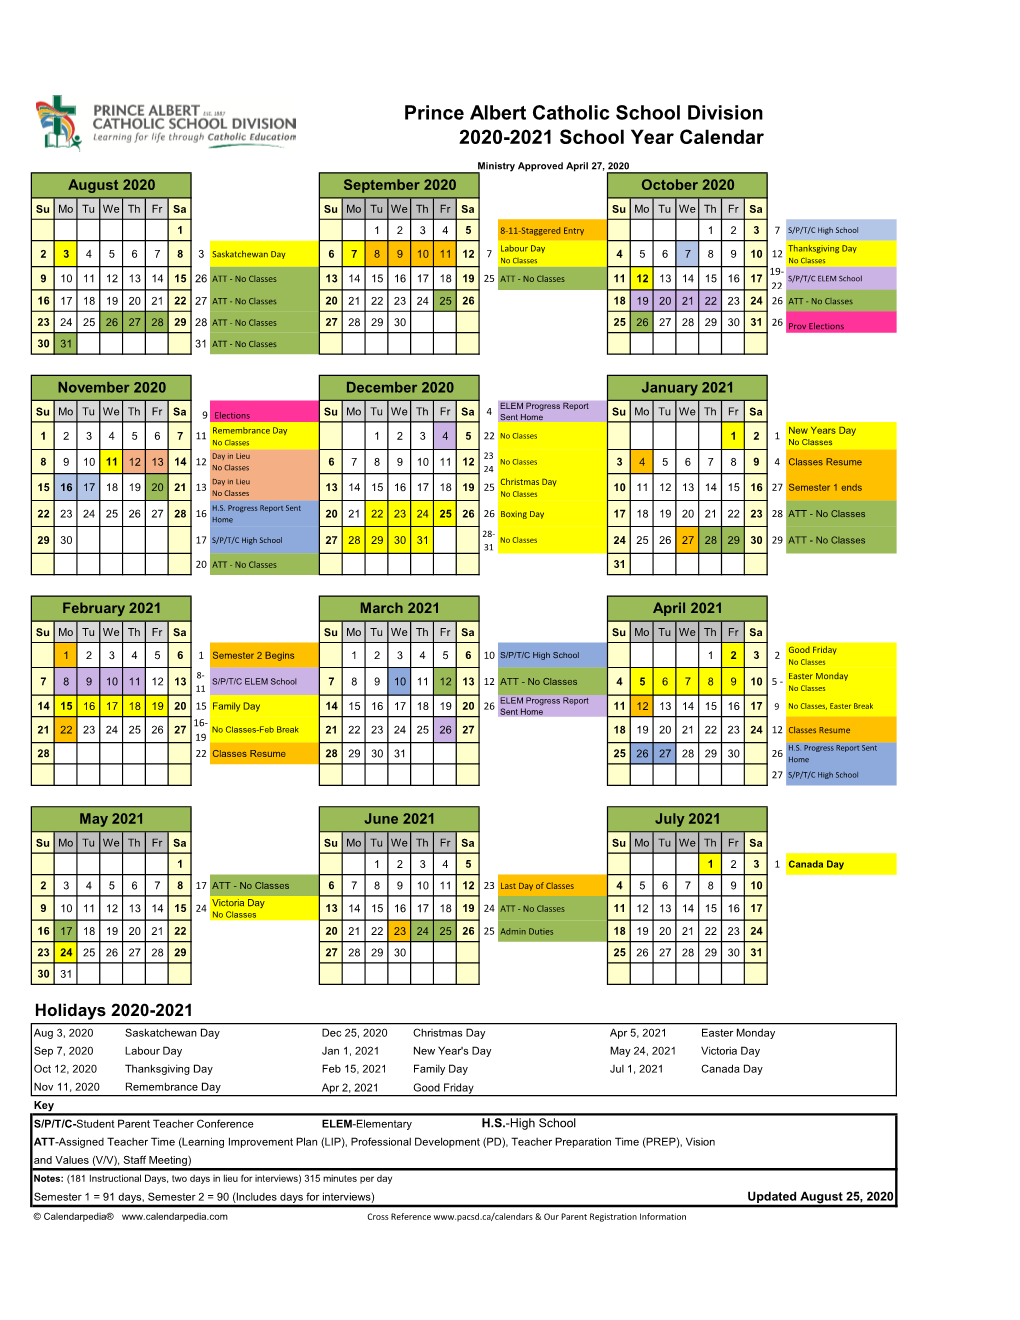 Prince Albert Catholic School Division 2020-2021 School Year Calendar